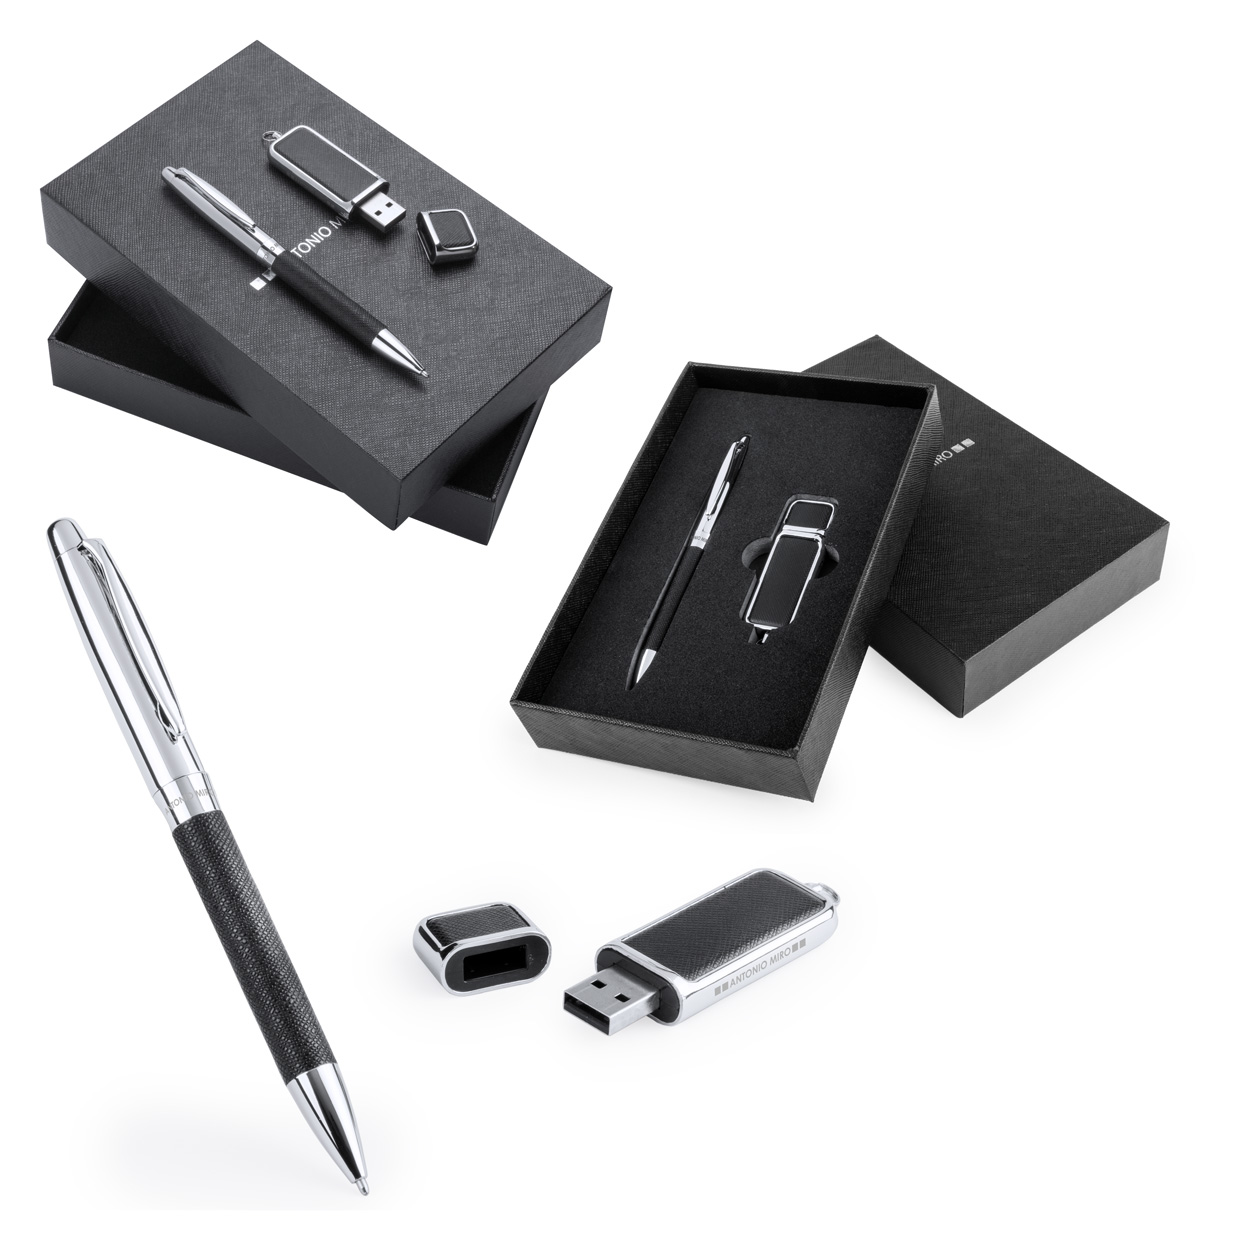 Dermop pen and USB flash drive set